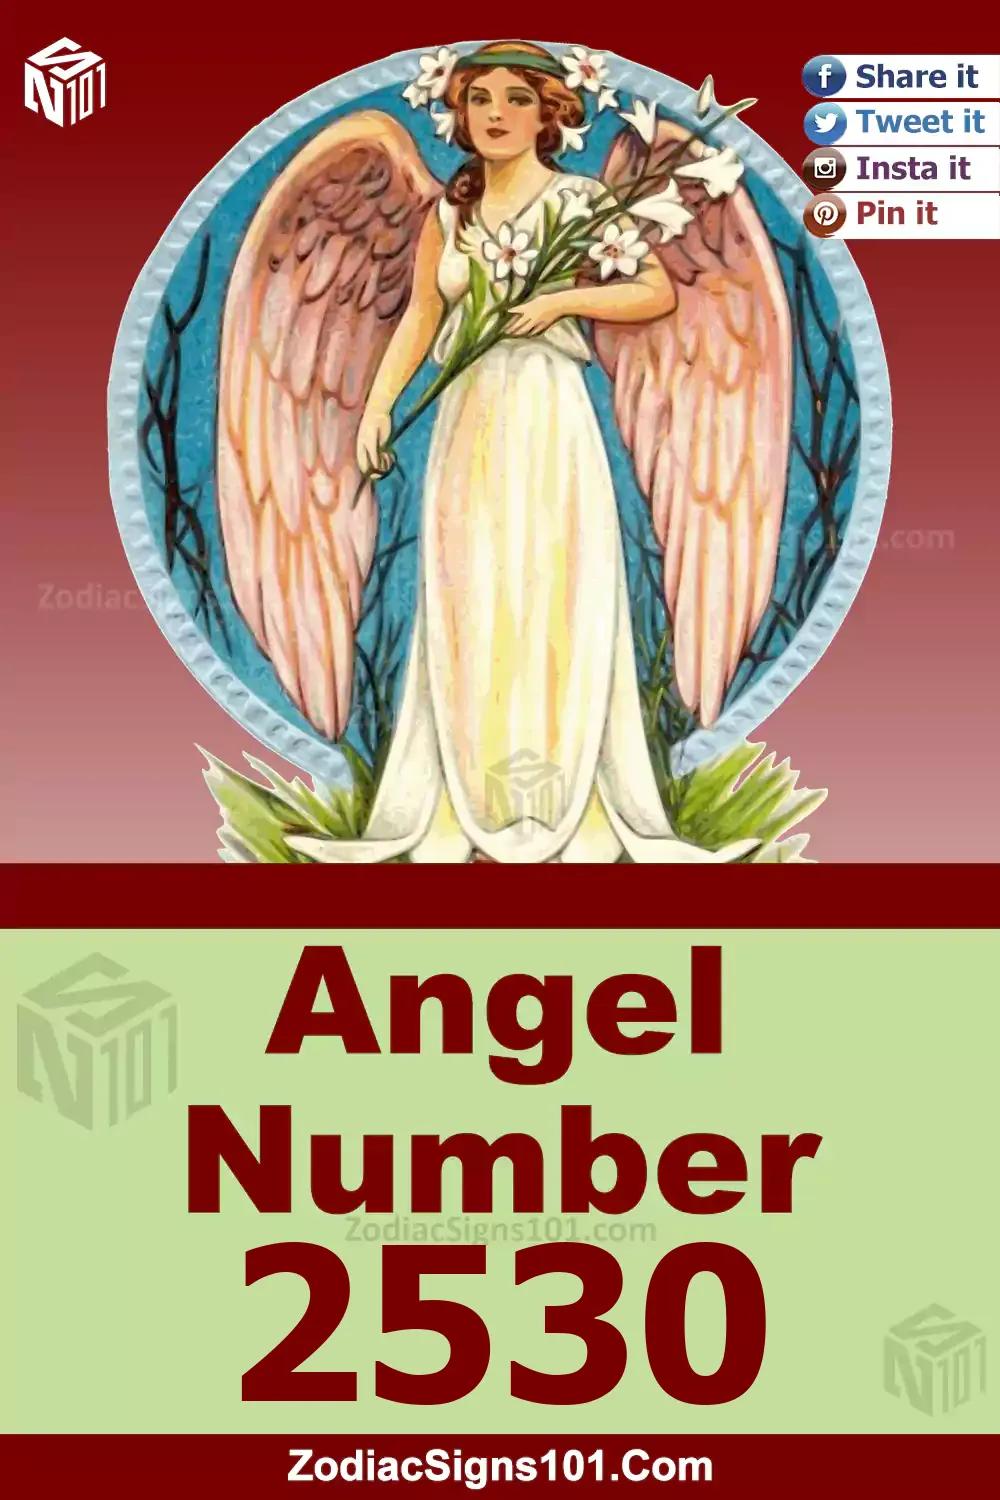 2530-Angel-Number-Meaning.jpg